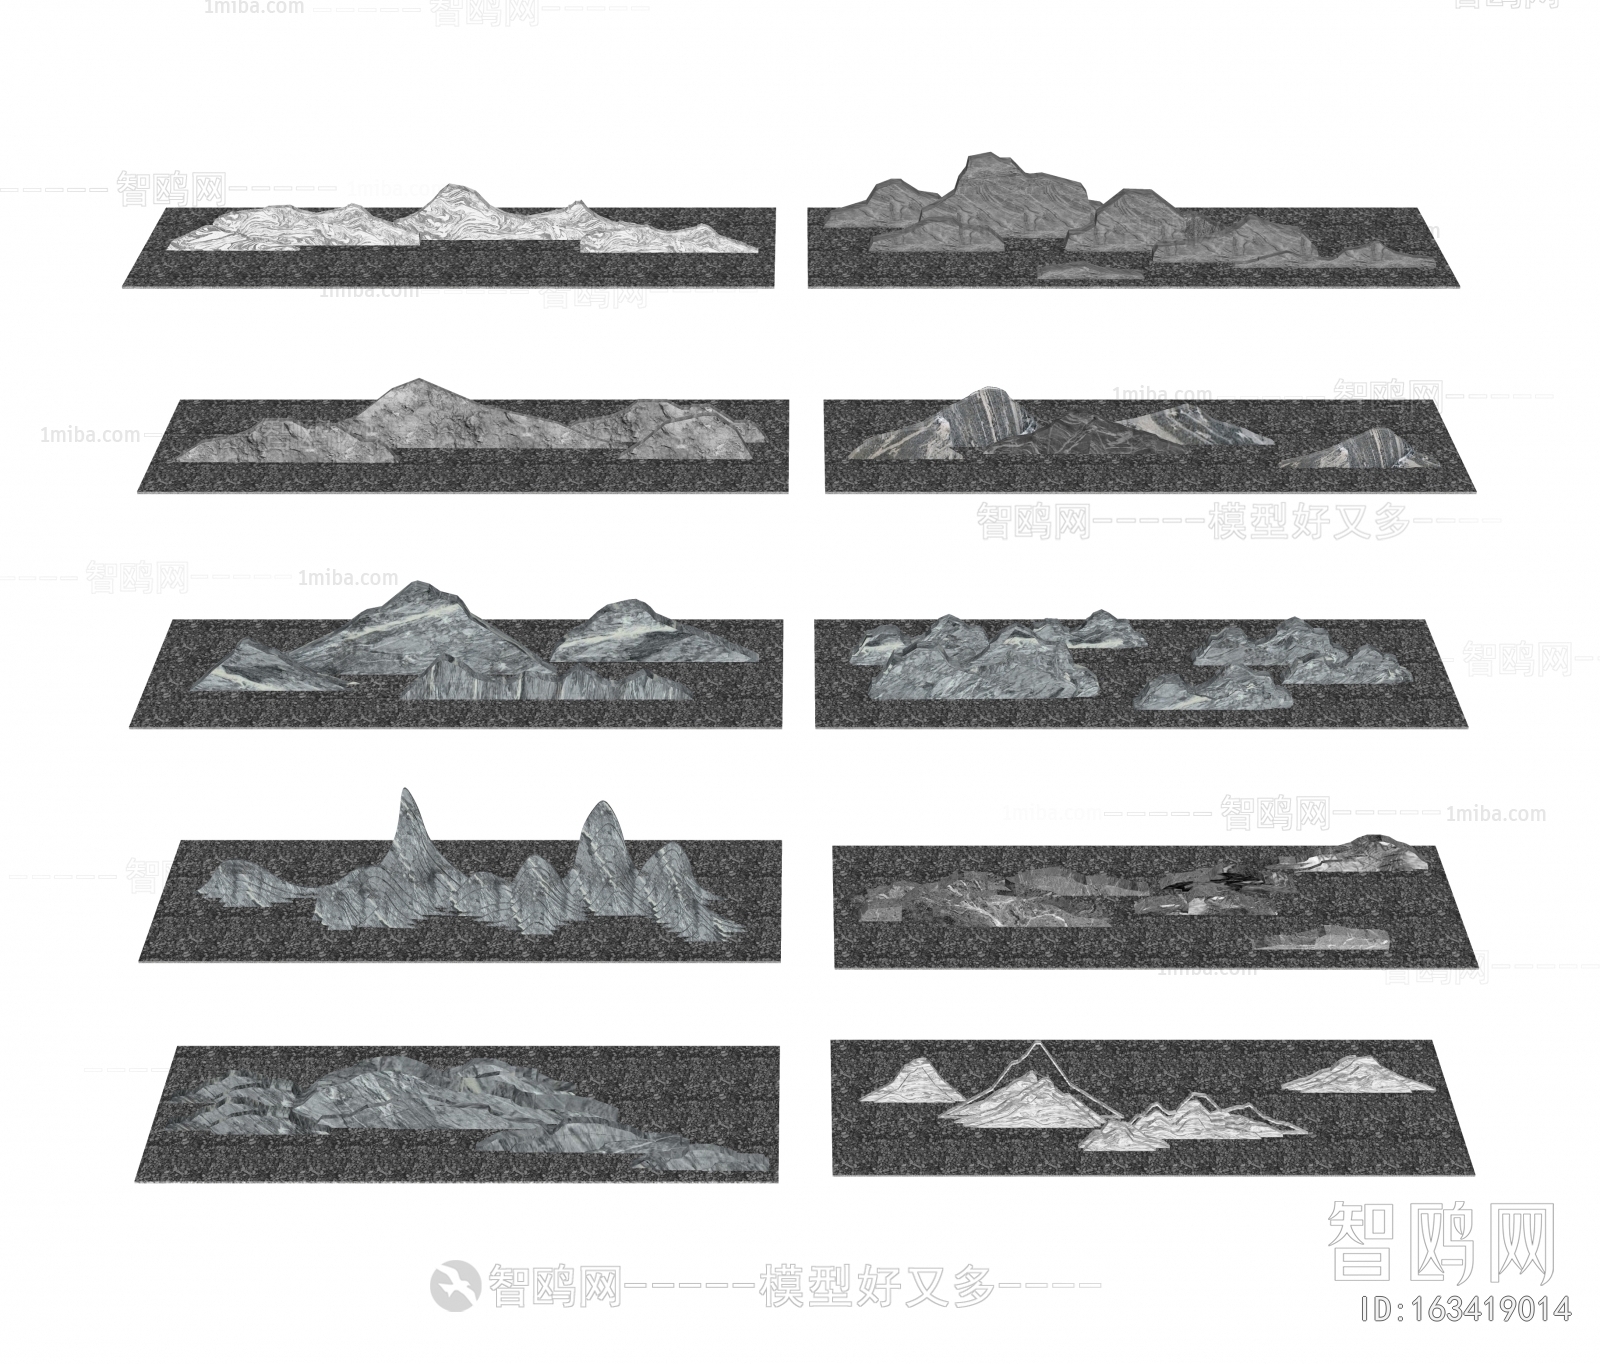 New Chinese Style Rockery Waterscape